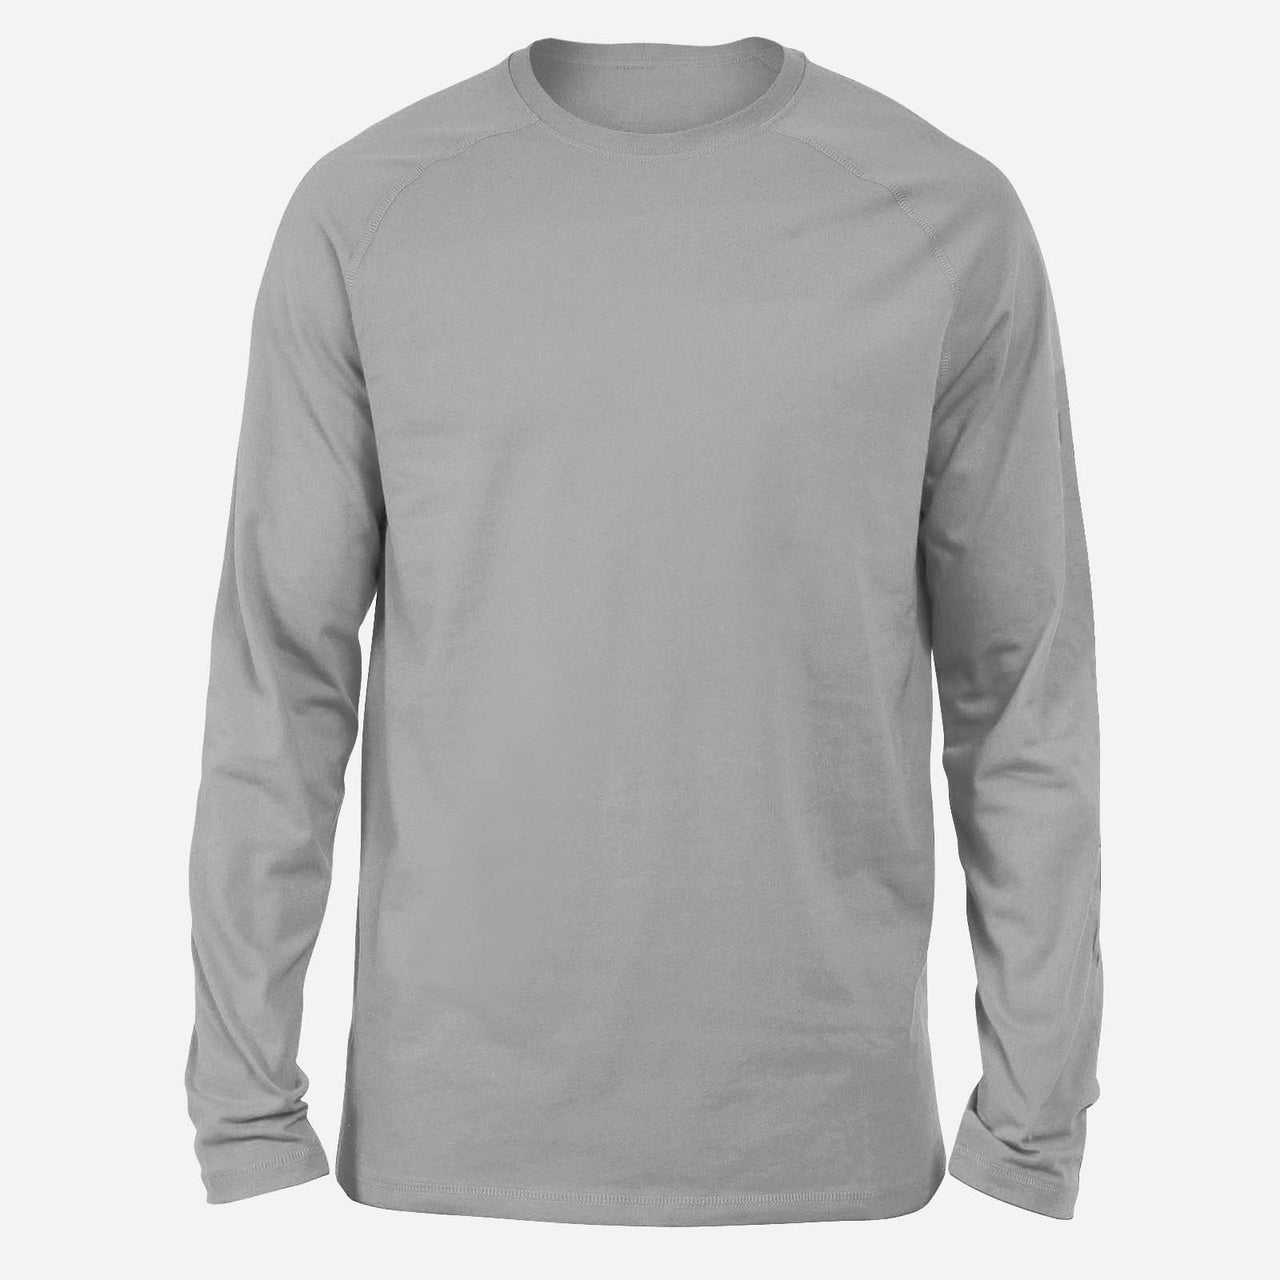 NO Design Super Quality Long-Sleeve T-Shirts